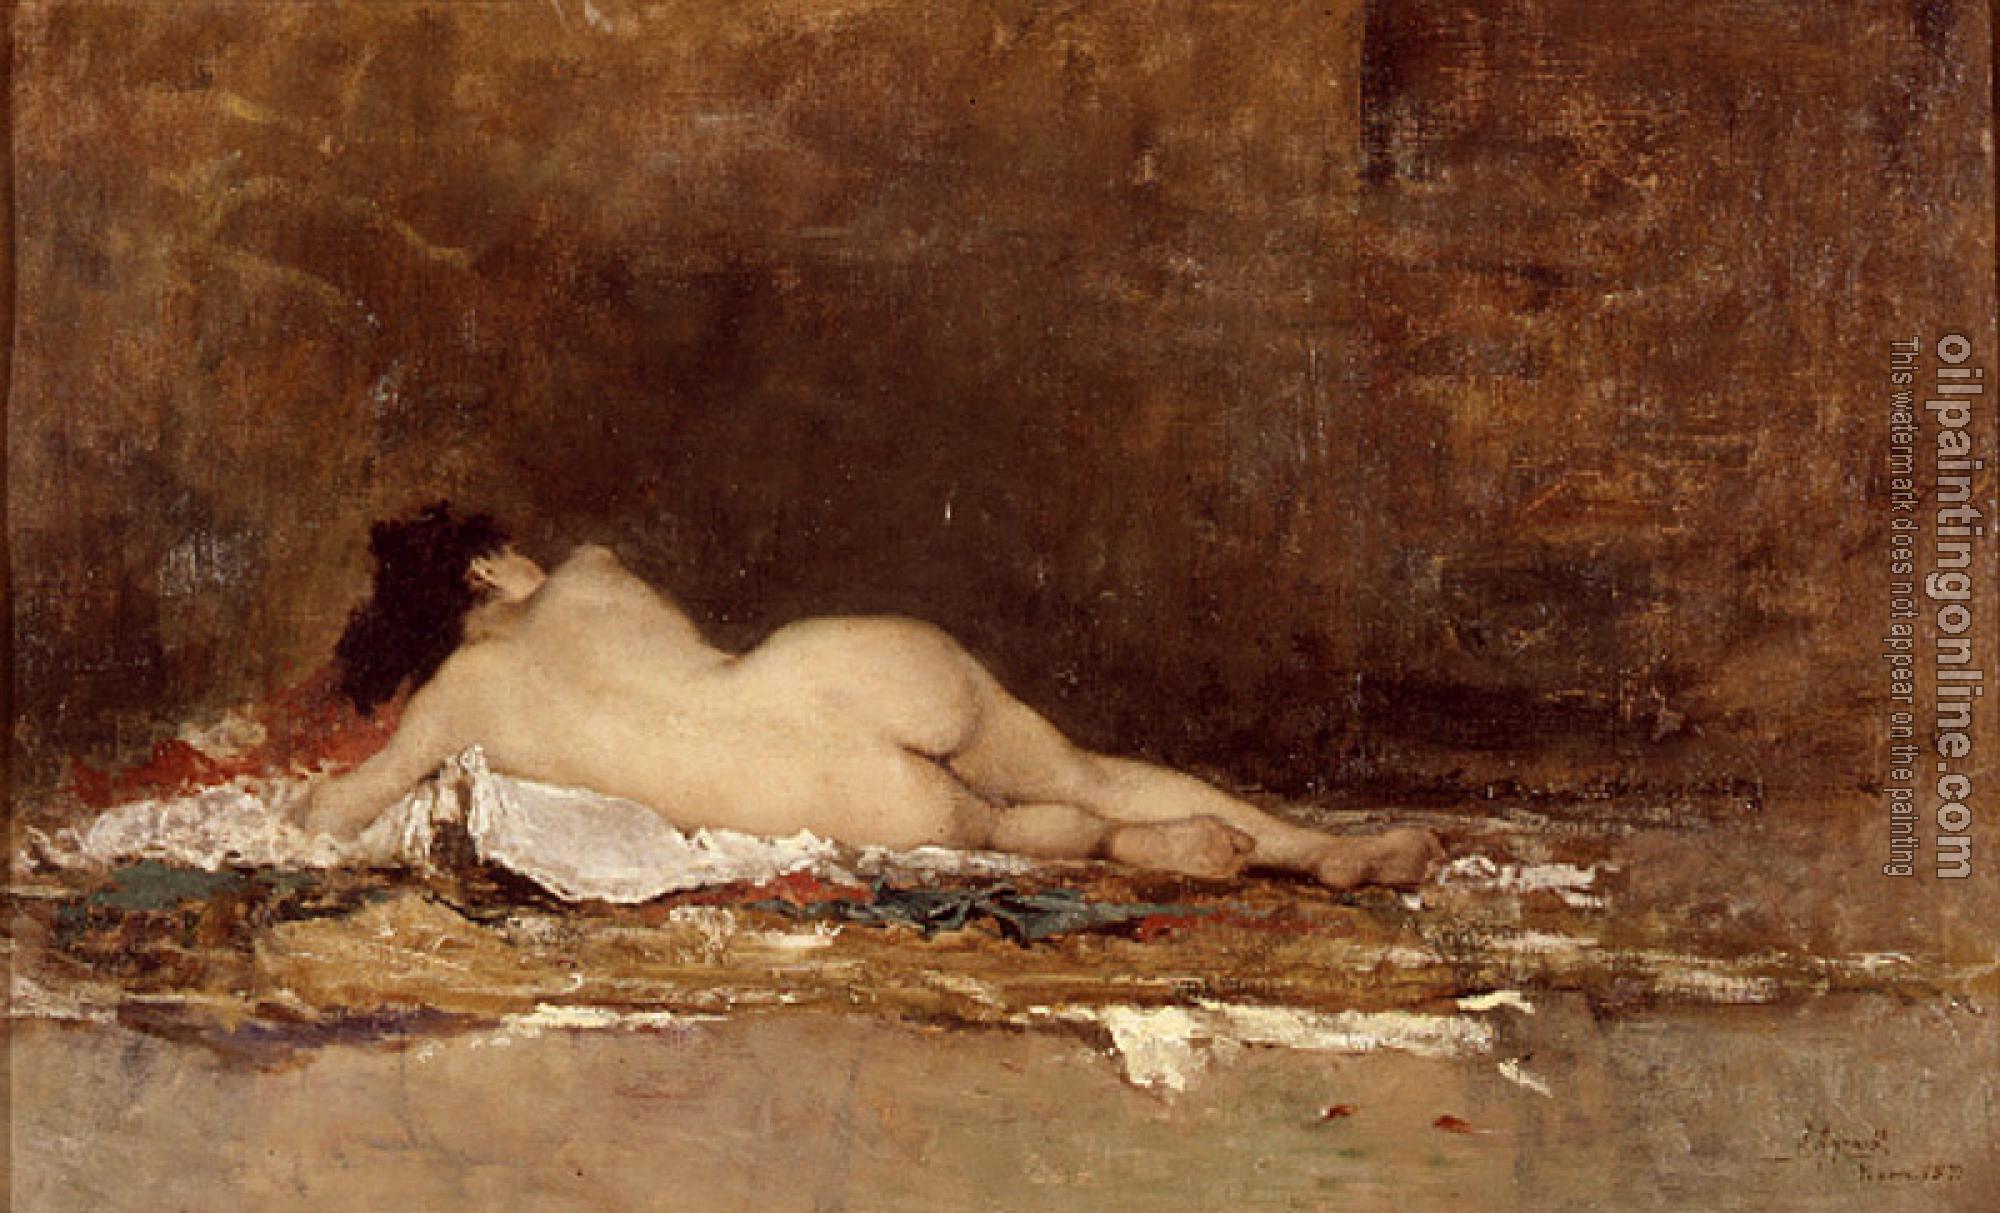 Agrasot, Juan Joaquin - Nude (Note), Desnudo (Apunte)